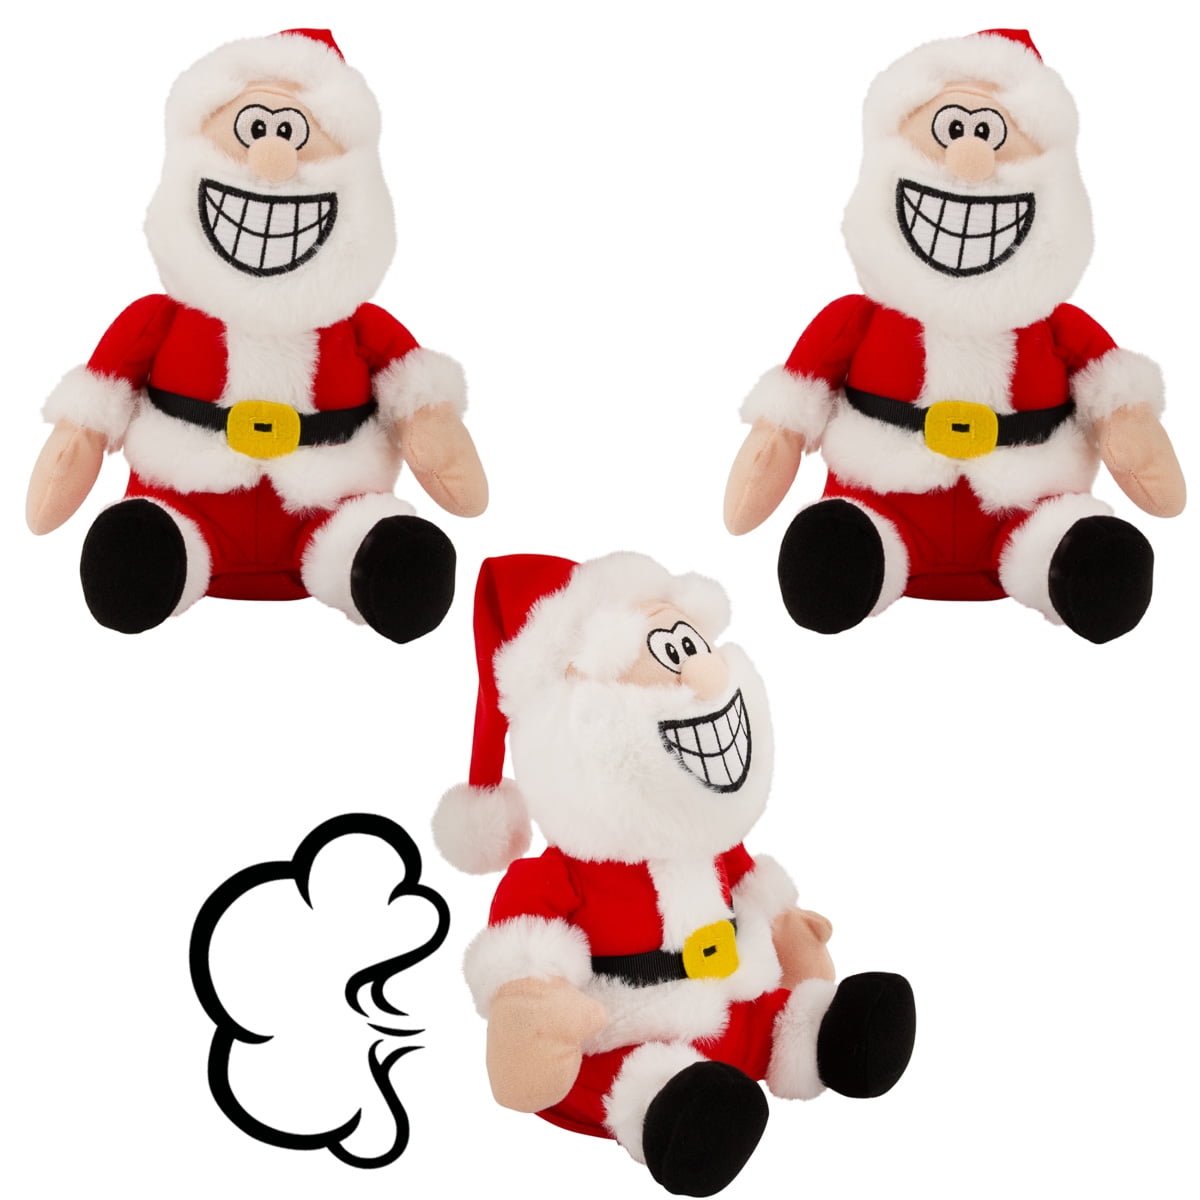 Twerking Reindeer Talking Toys Stuffed Animals Animated Christmas Figures Decor 